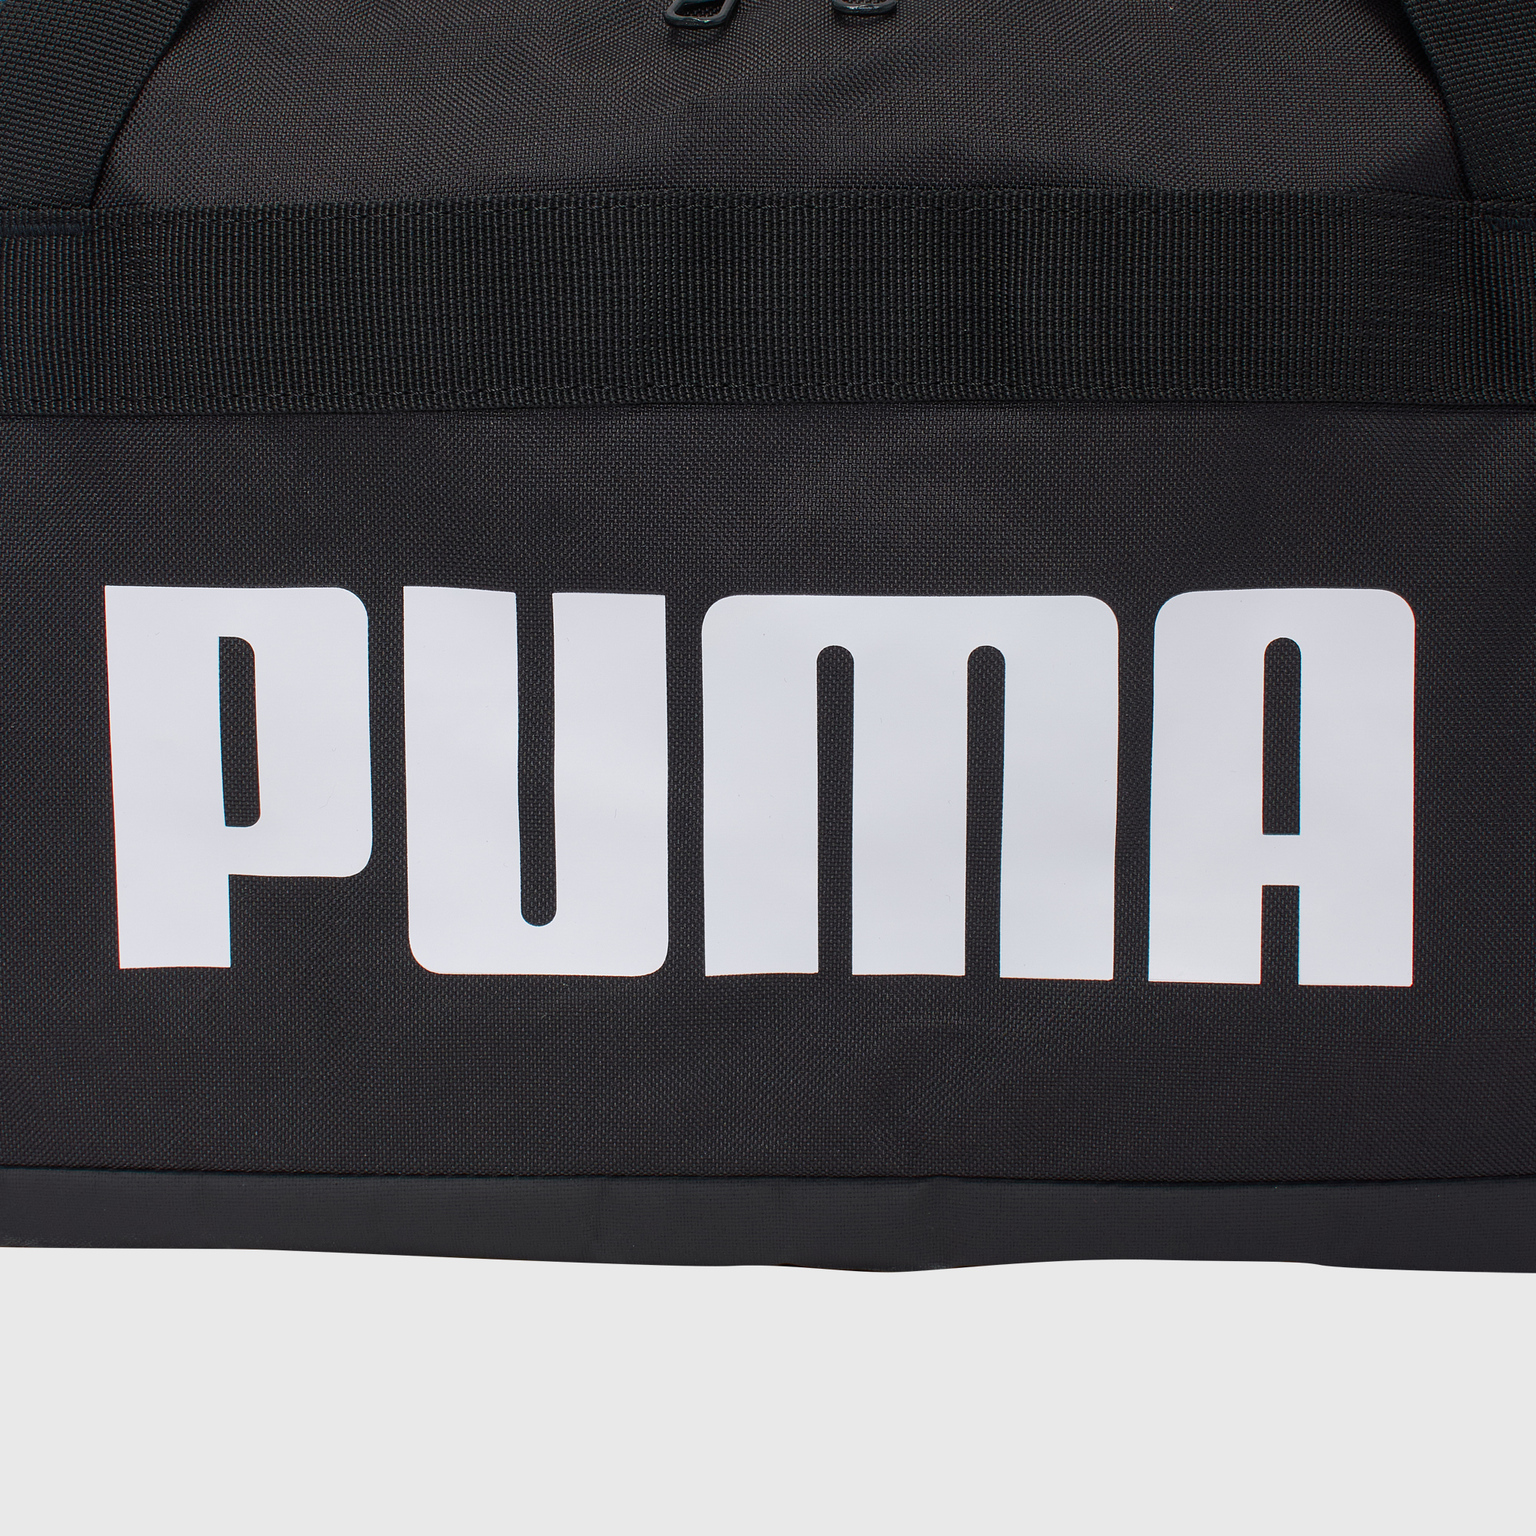 Сумка Puma Challenger Duffelbag S 07953001